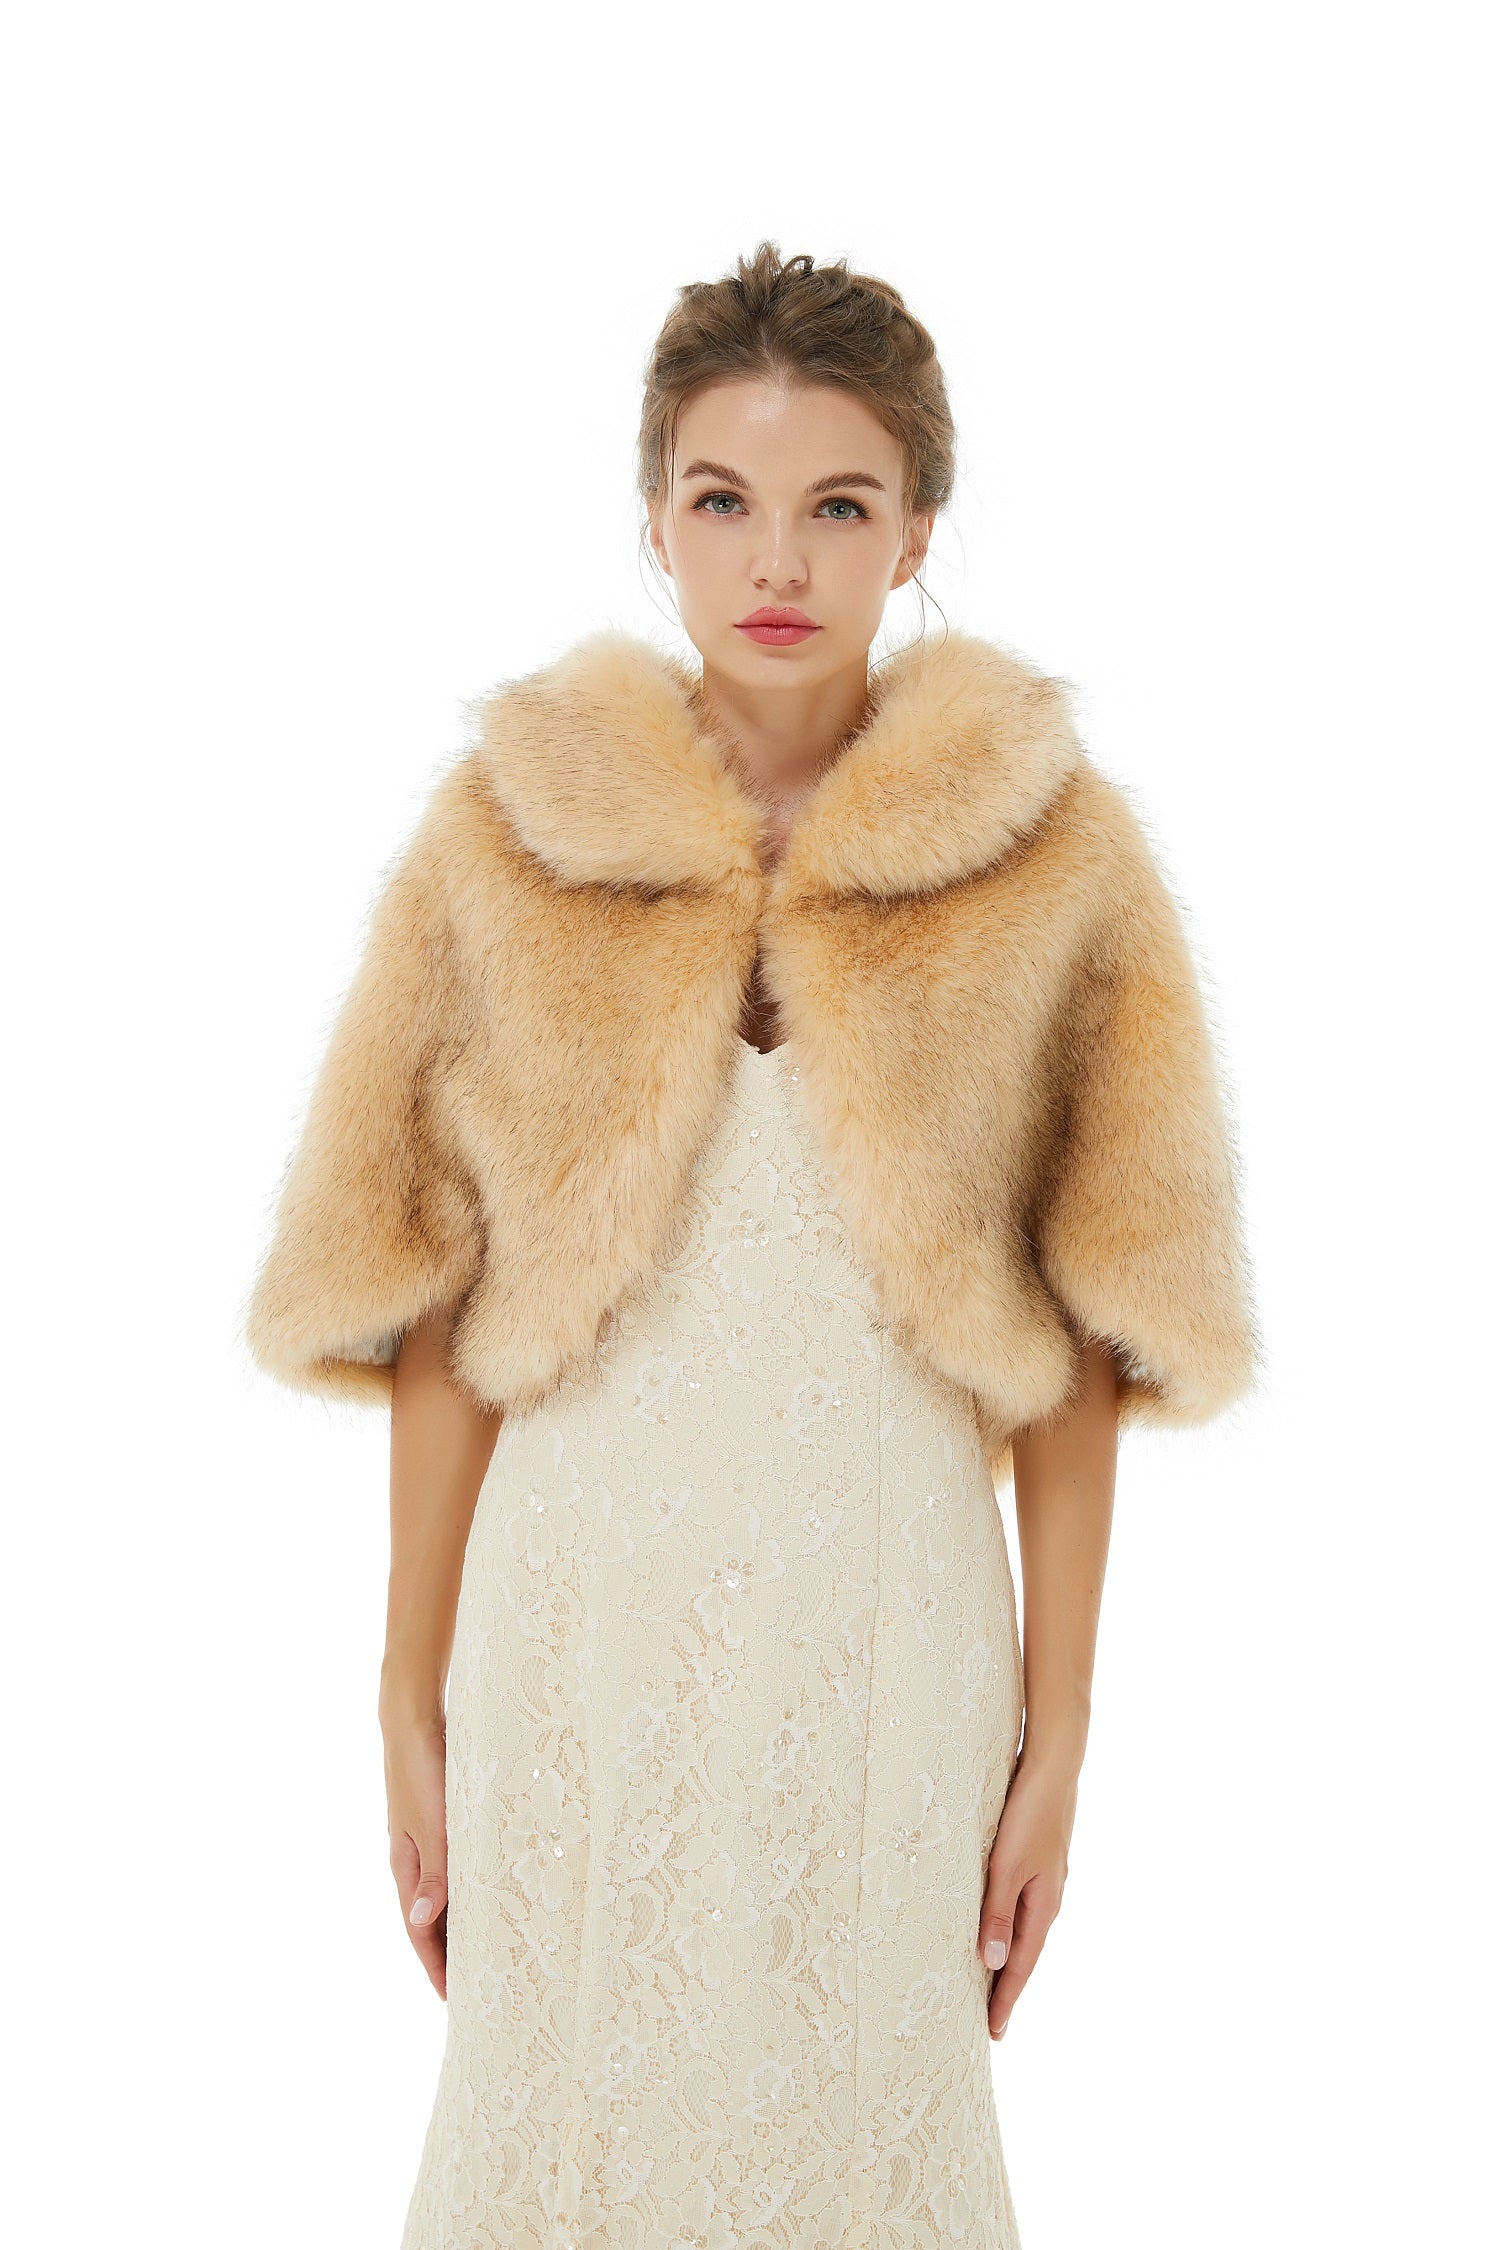 Charming Winter Faux Fur Wrap Bridal Wear Jacket - lulusllly